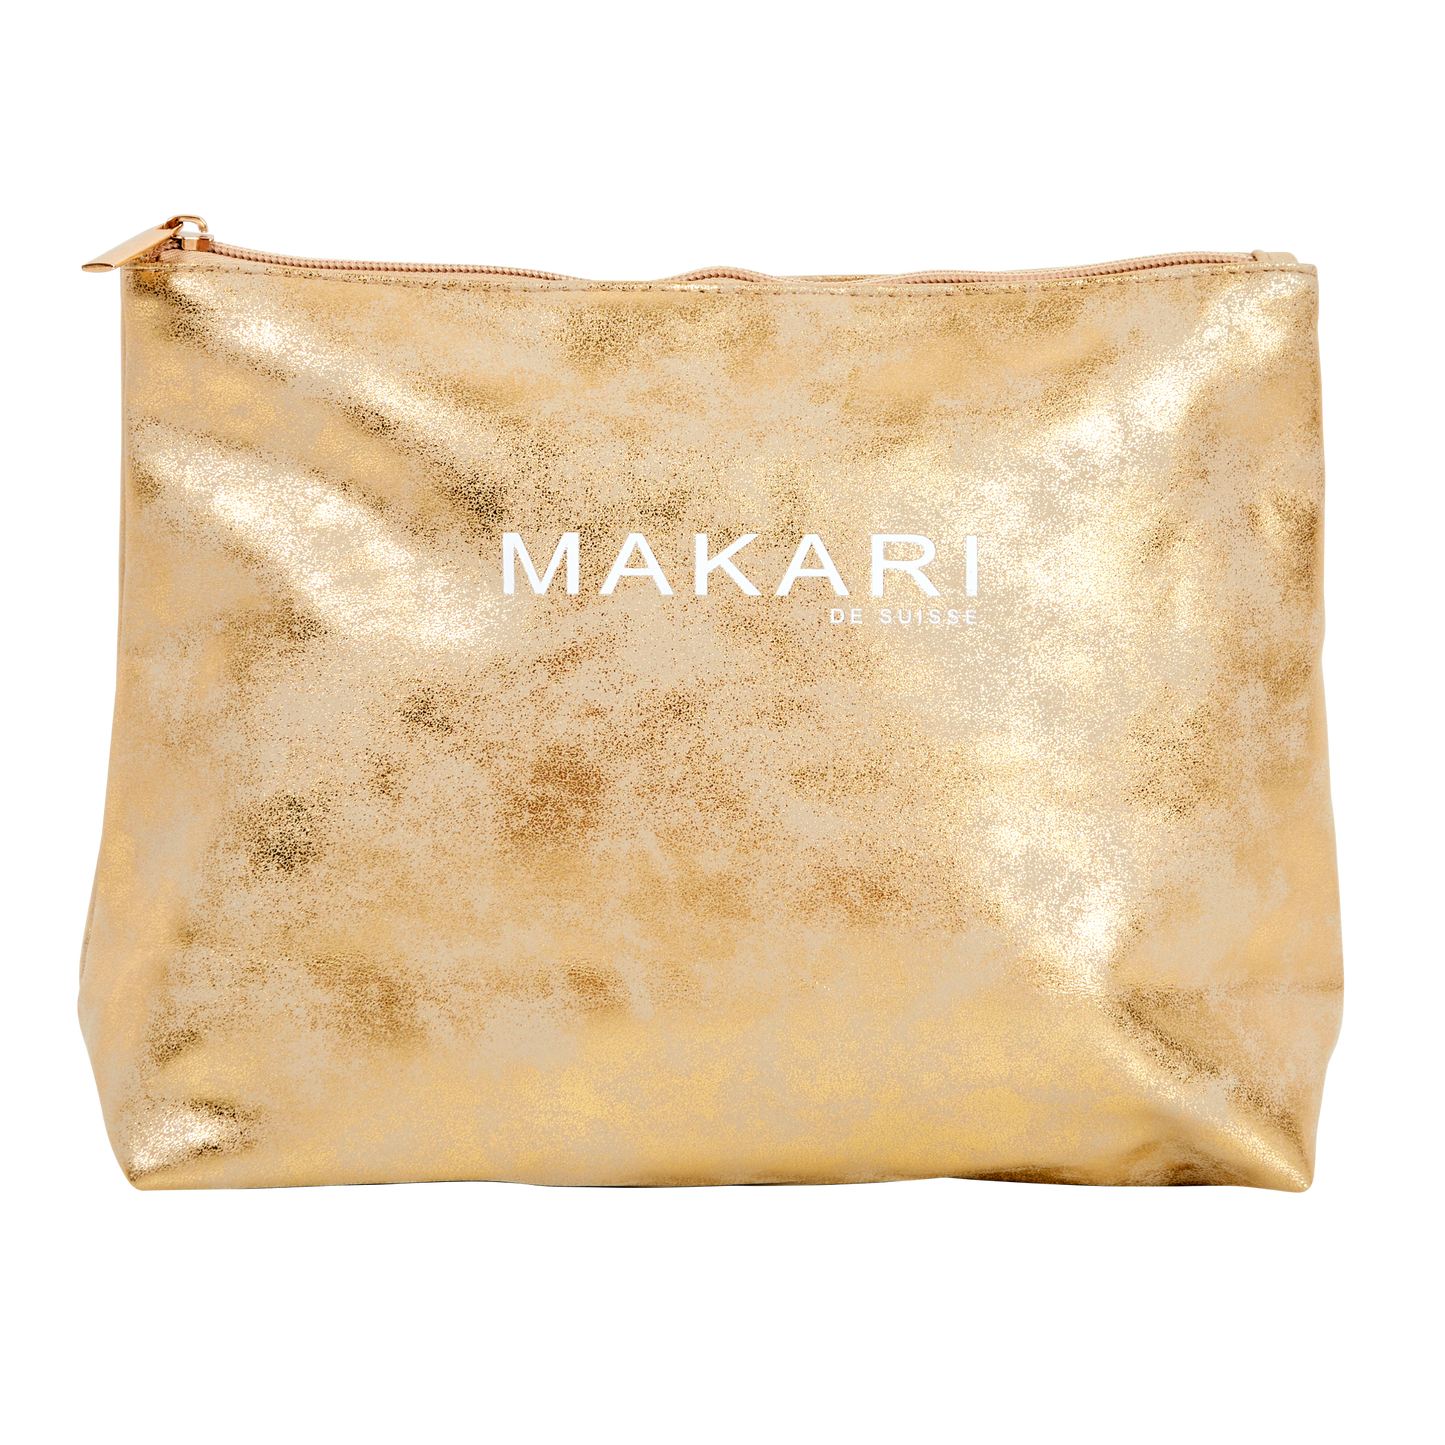 Makari Gold Cosmetics Bag